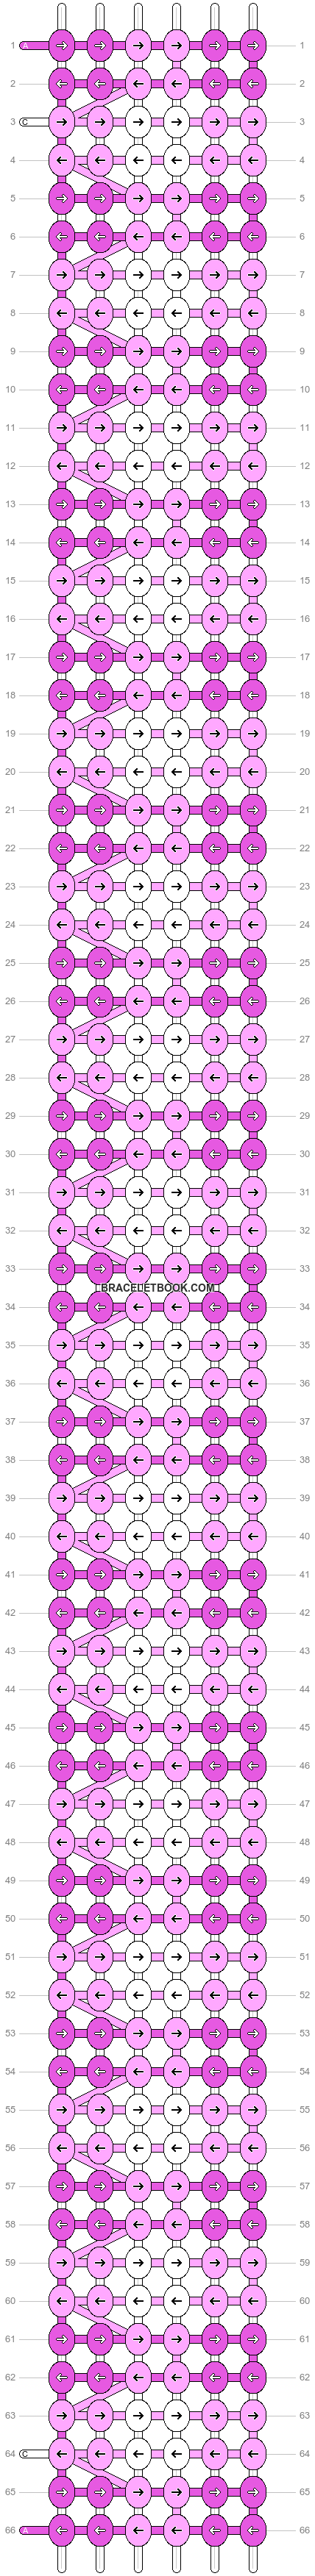 Alpha pattern #80755 variation #153011 pattern